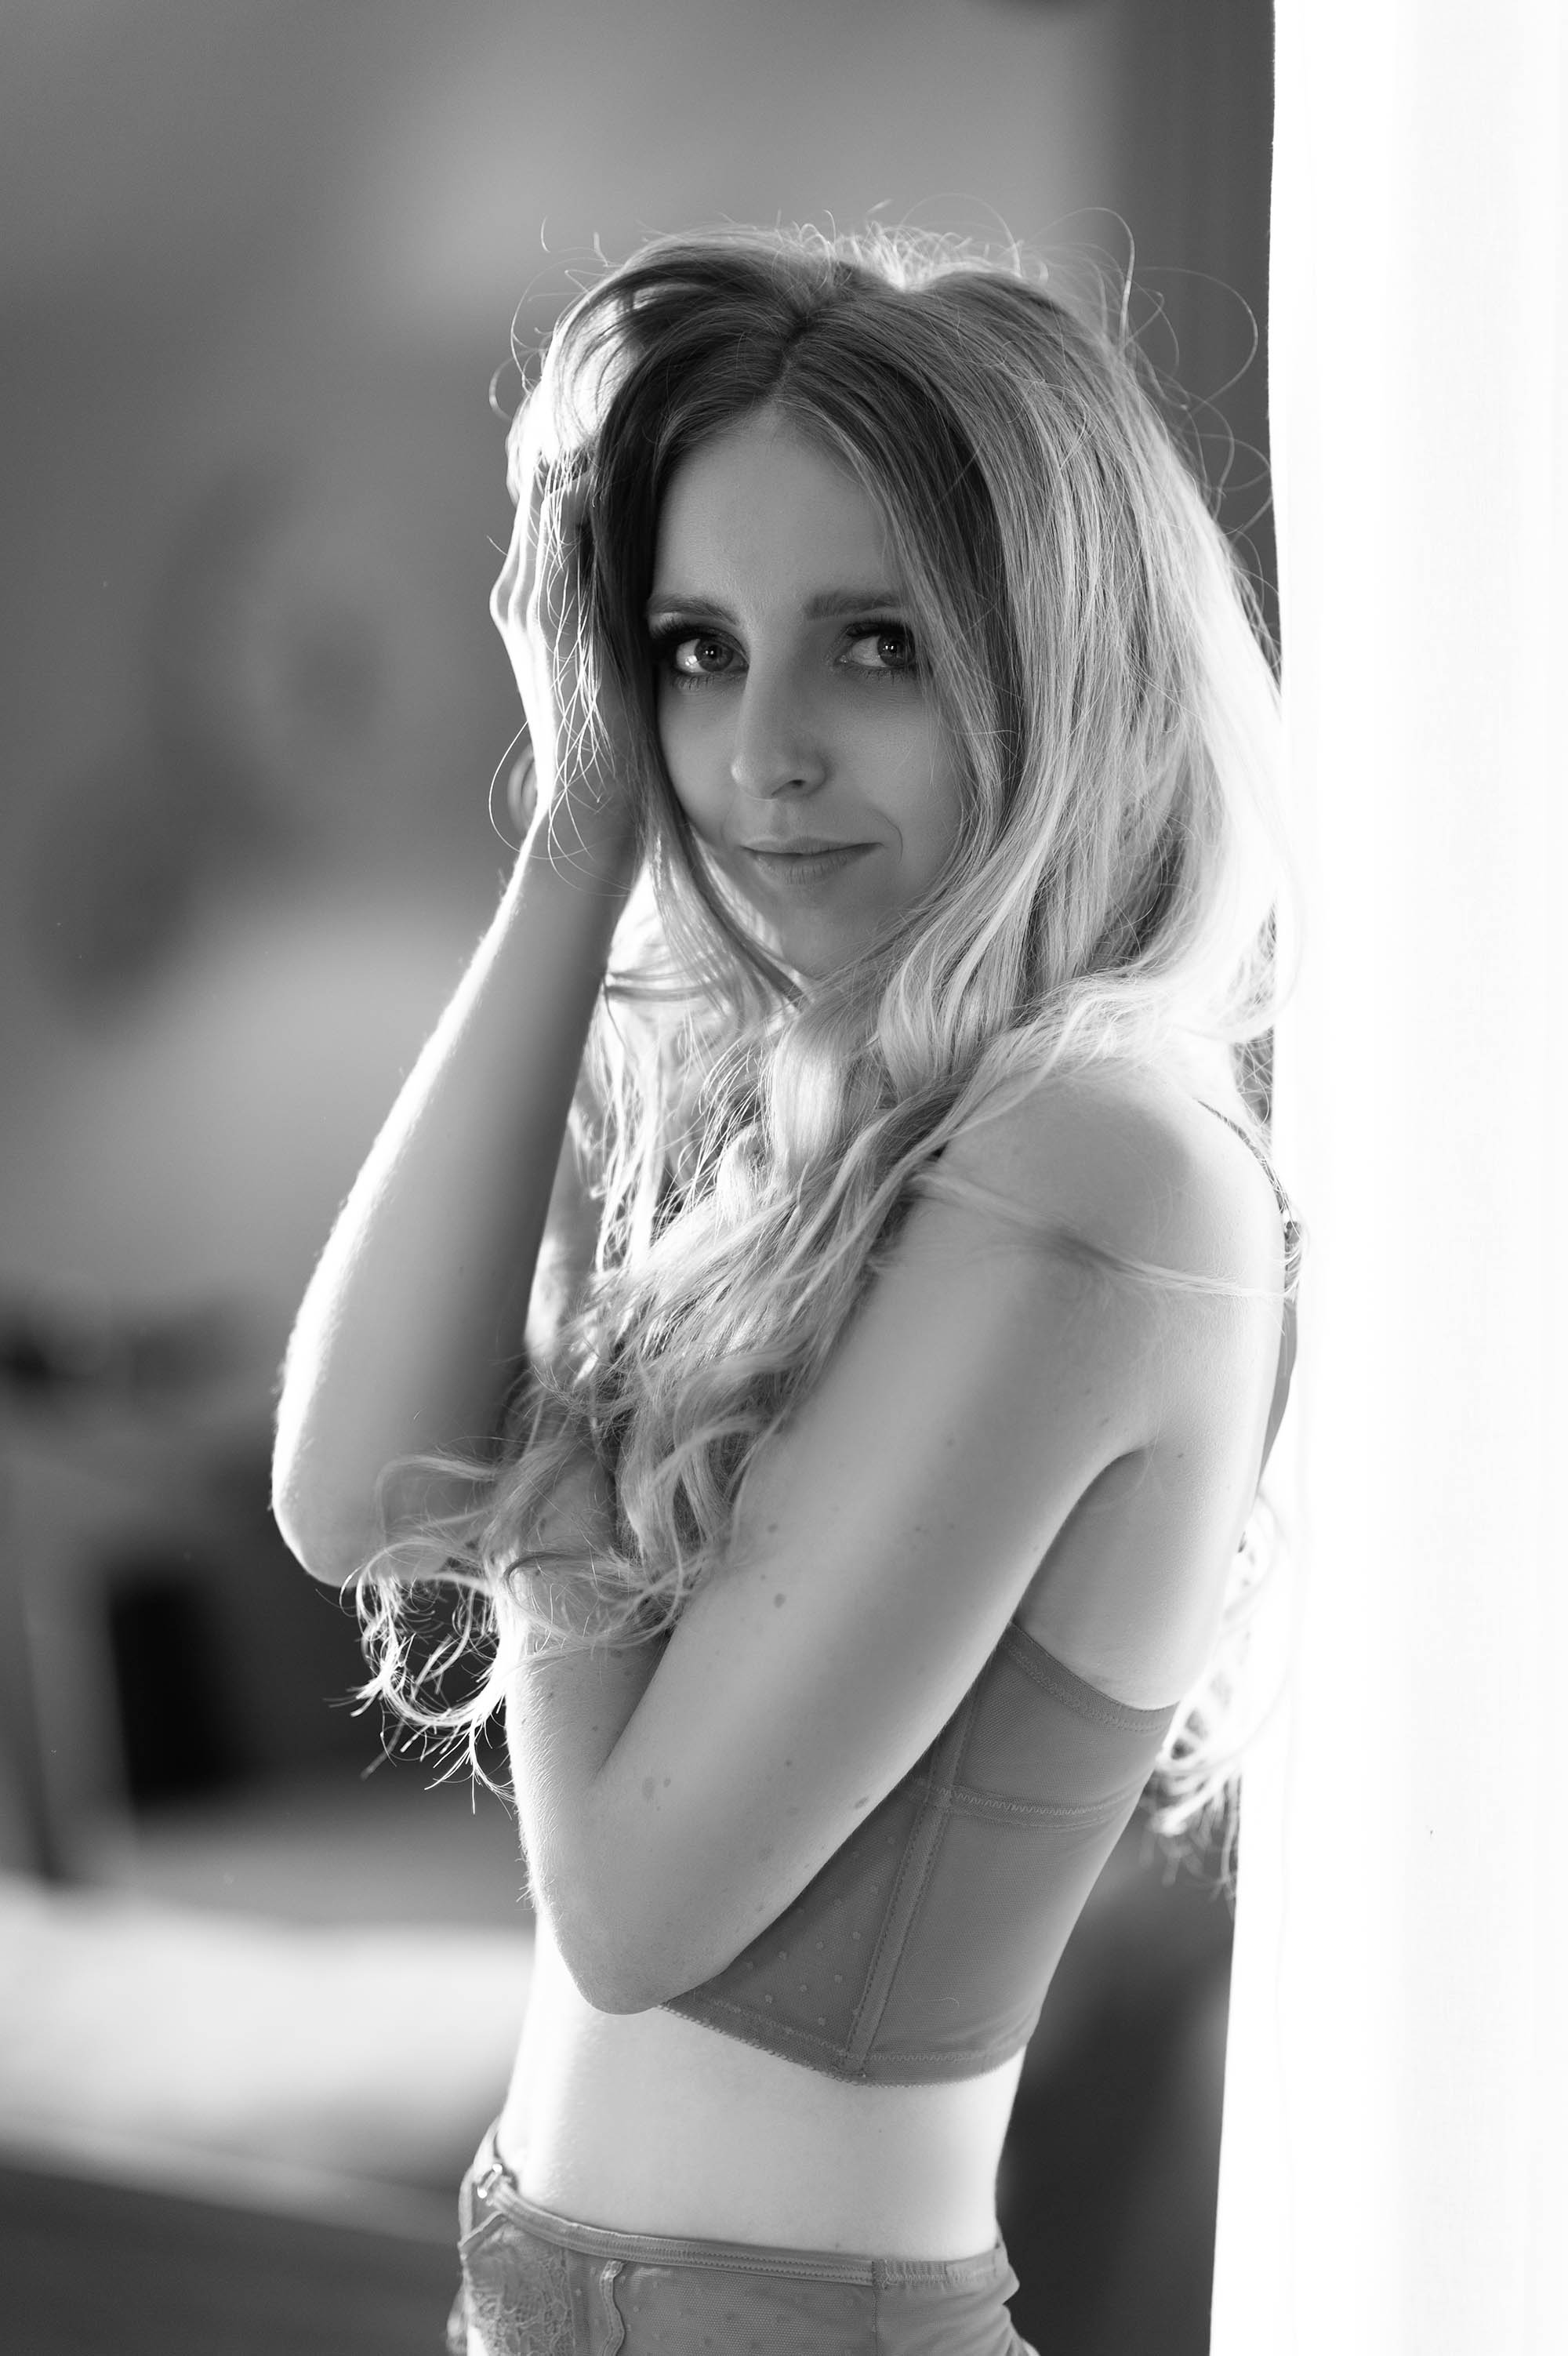 Celine Van Cauwenberghe, model from Belgium at a boudoir photoshoot